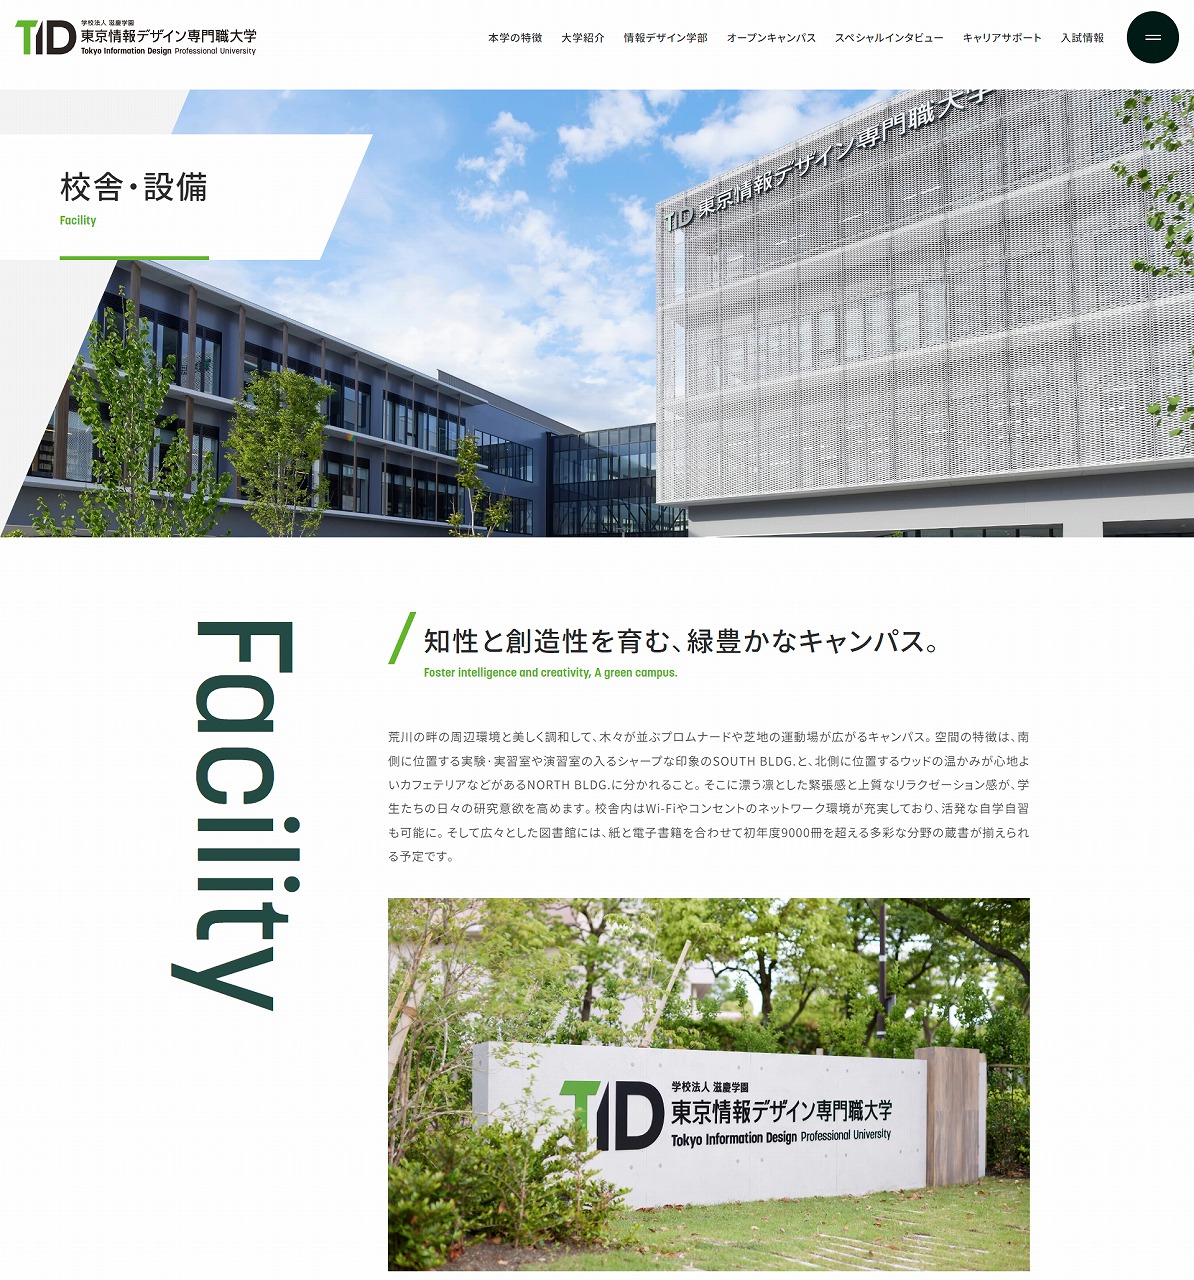 TID 東京情報デザイン専門職大学top